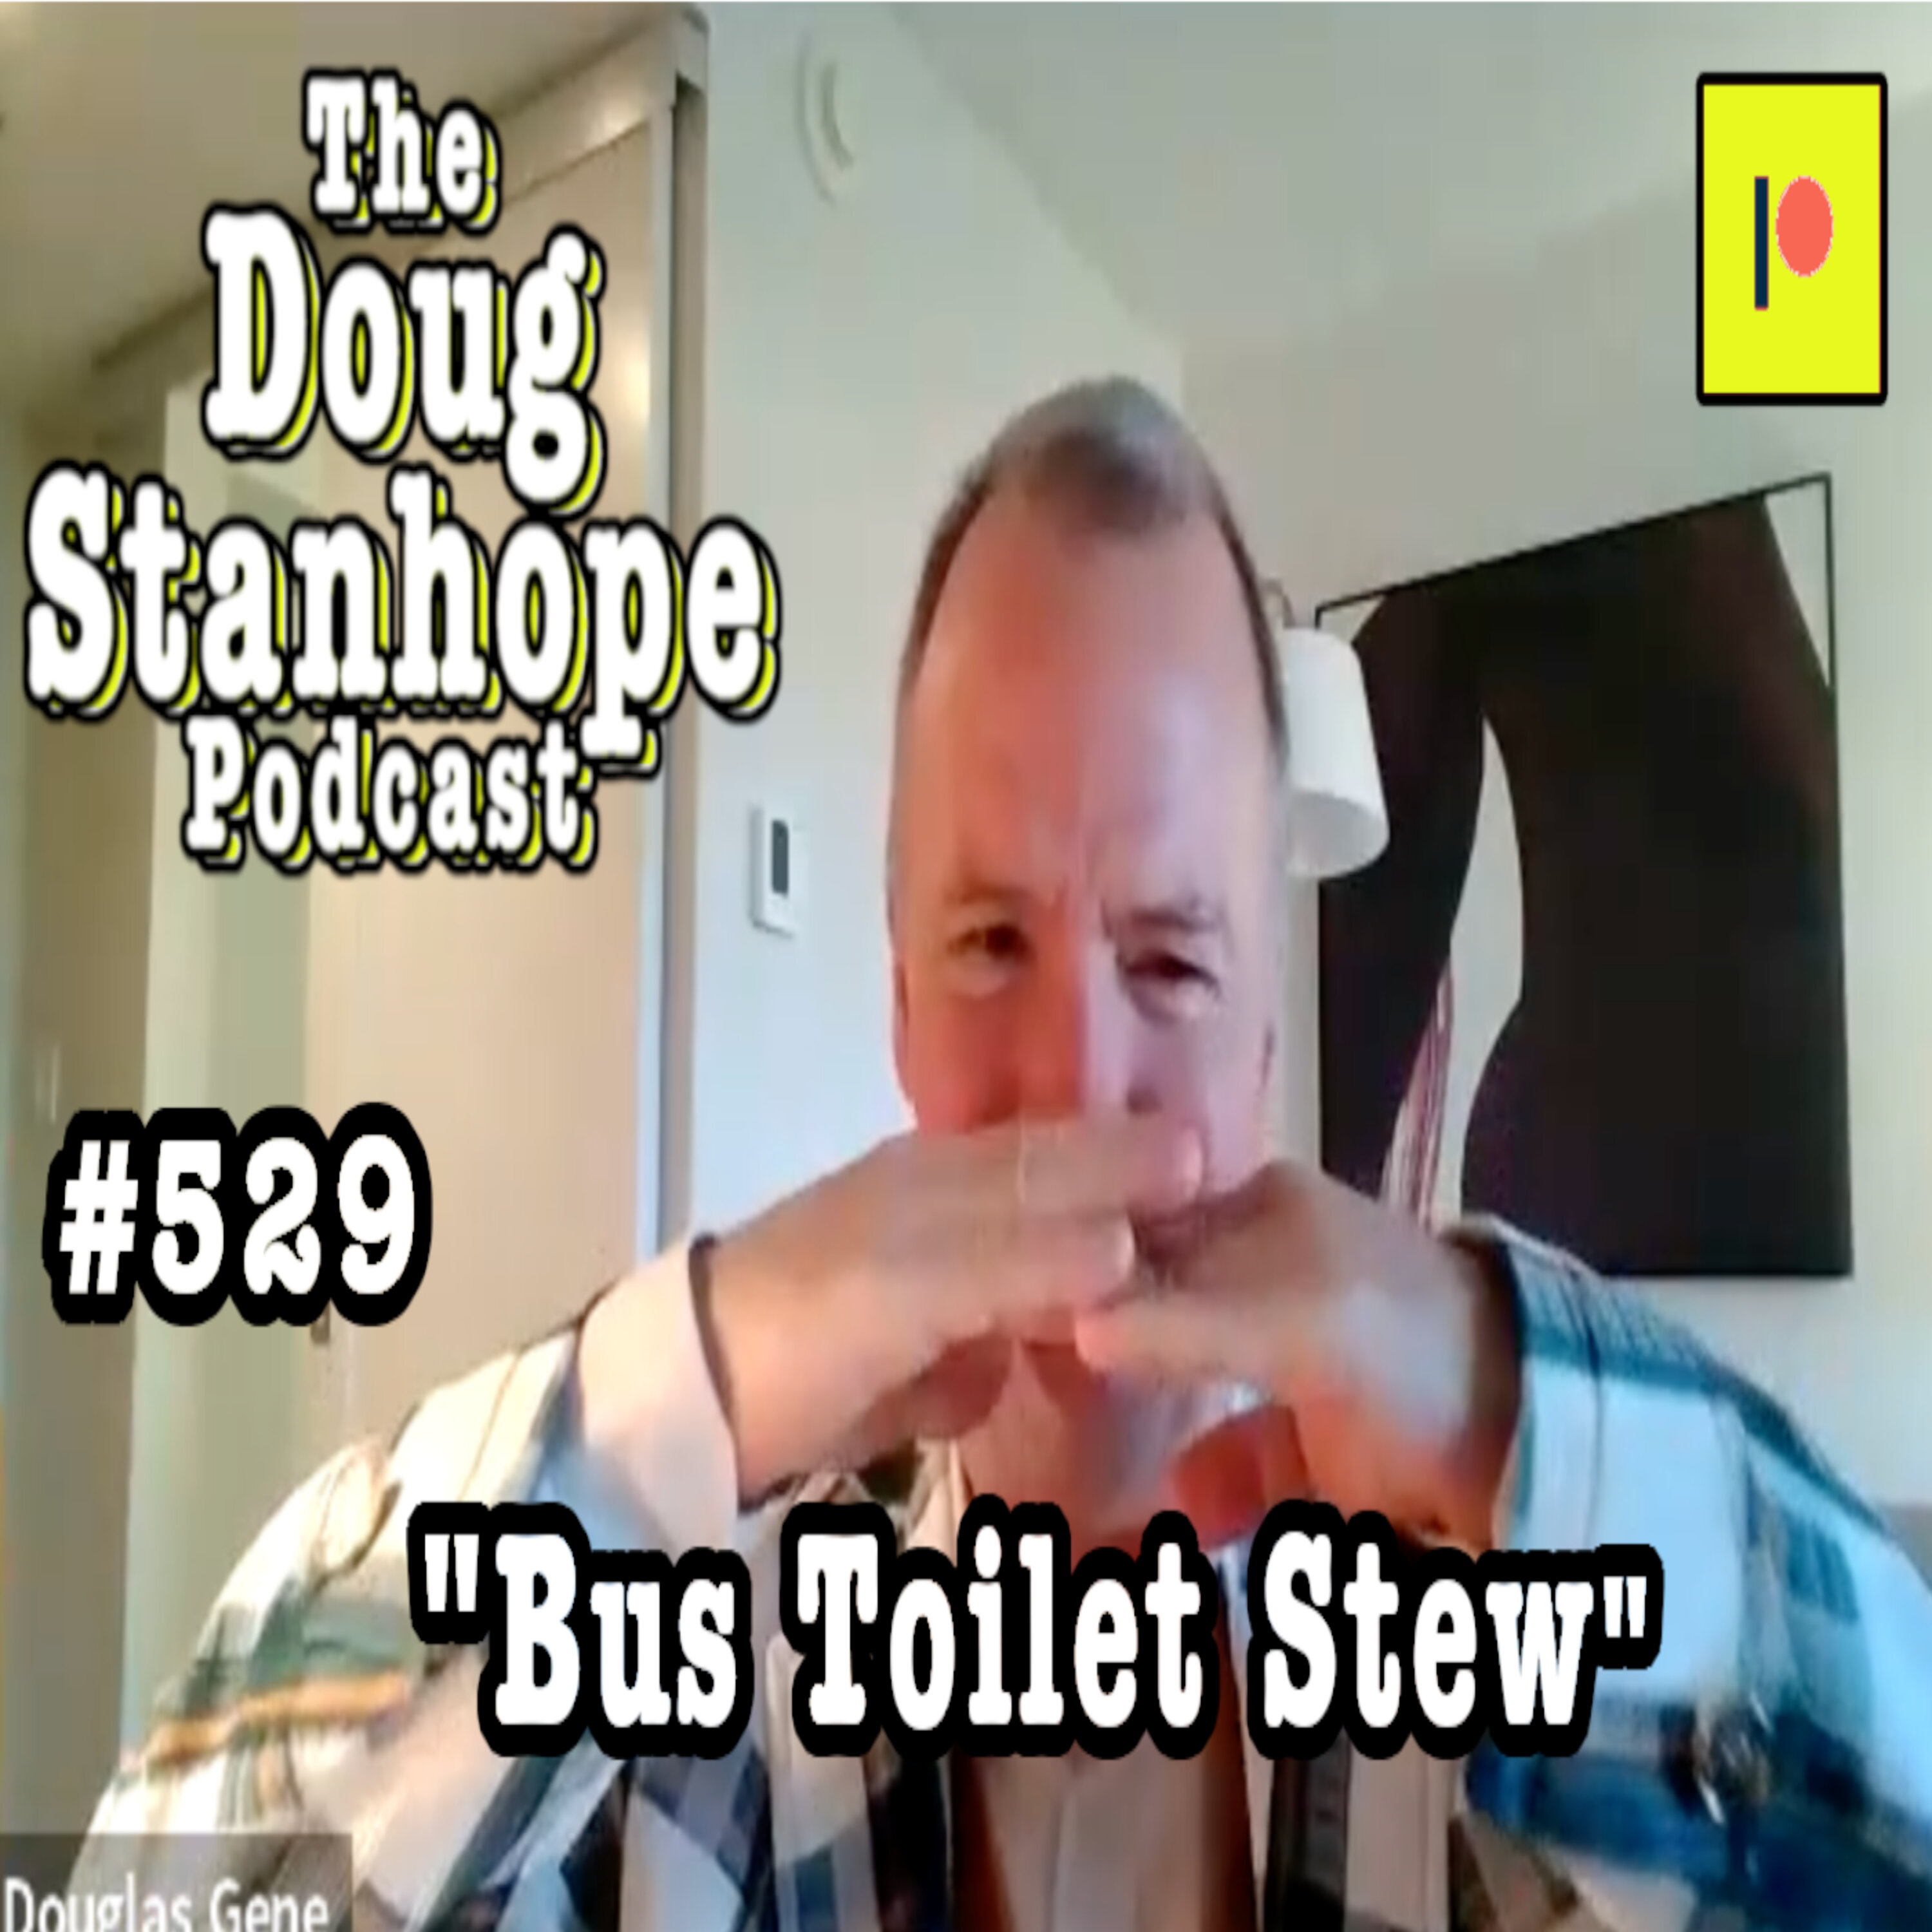 Doug Stanhope Podcast #529 - ”Bus Toilet Stew”